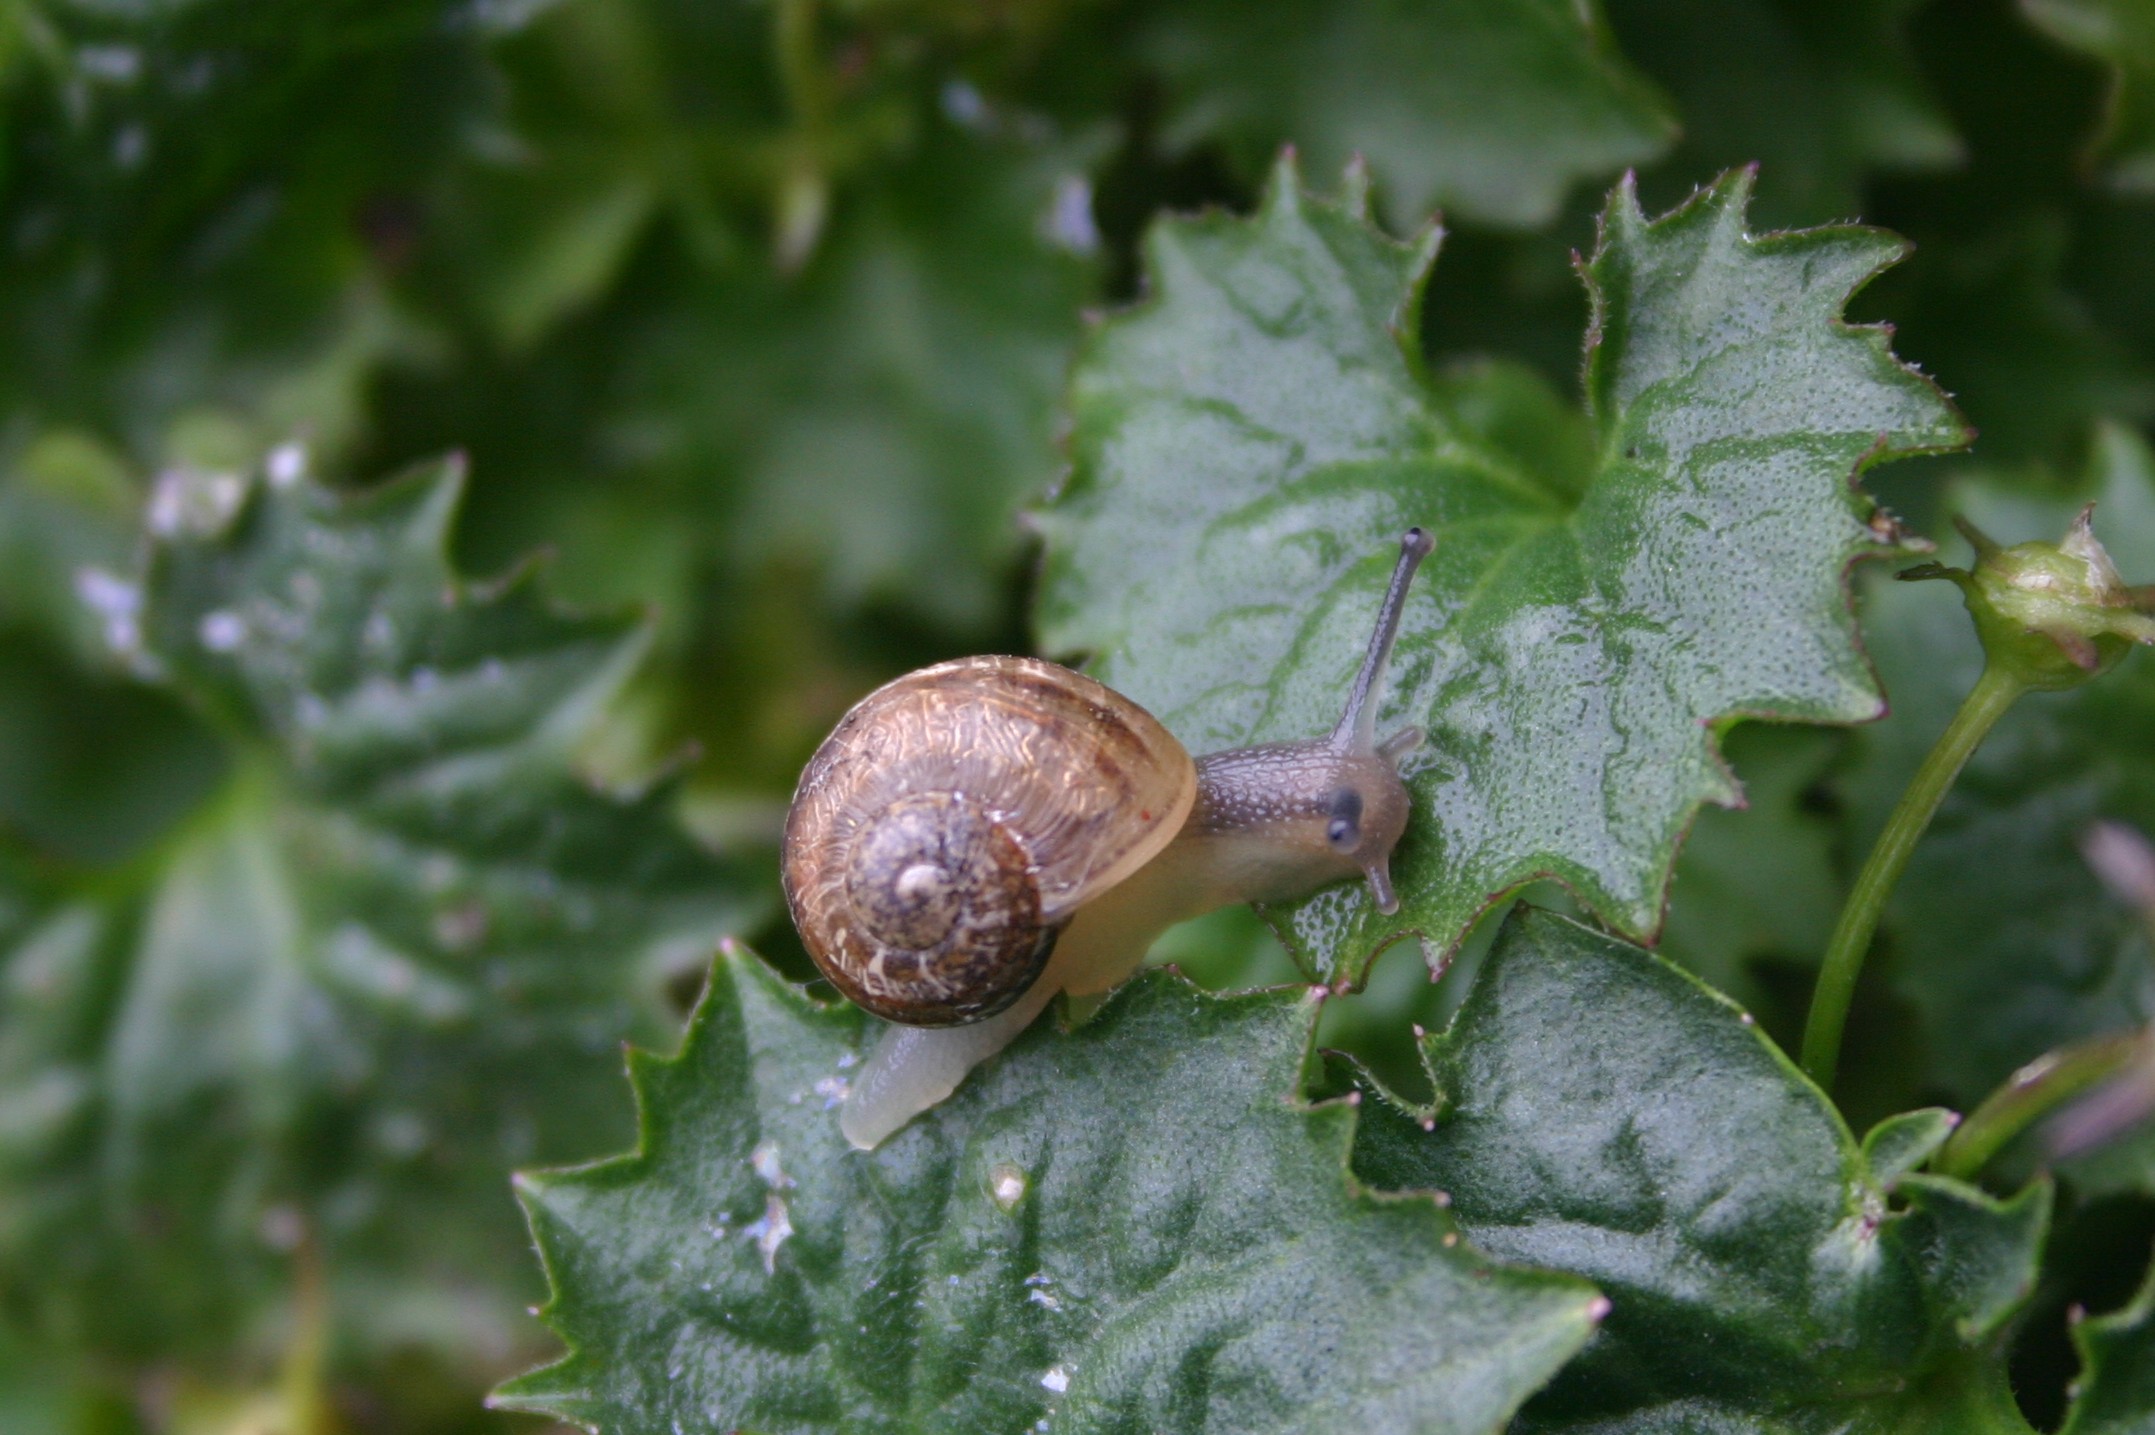 Garden Snail on a leaf in a garden.